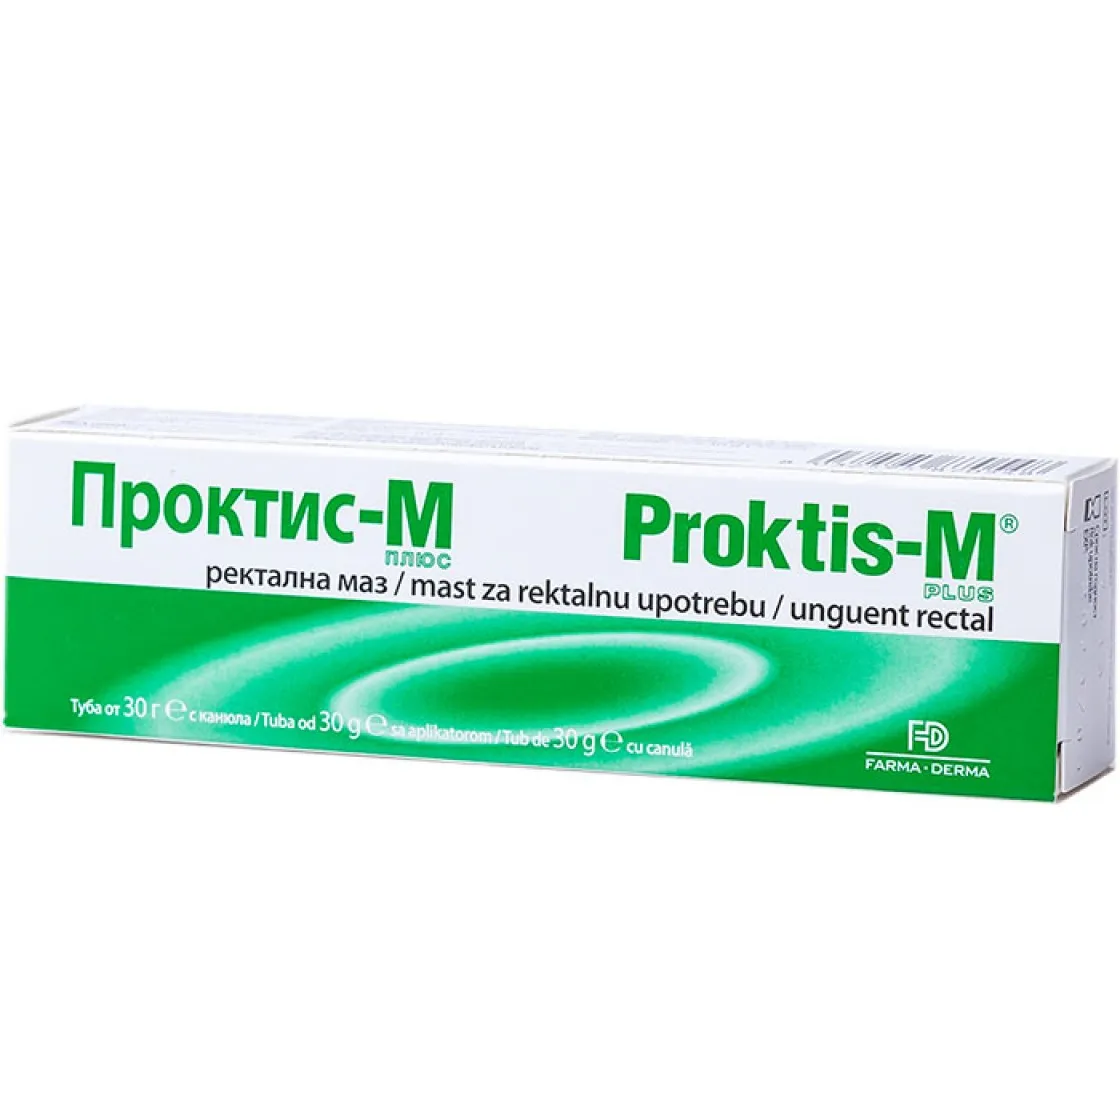 Proktis-M unguent, 30g, Farma-Derma